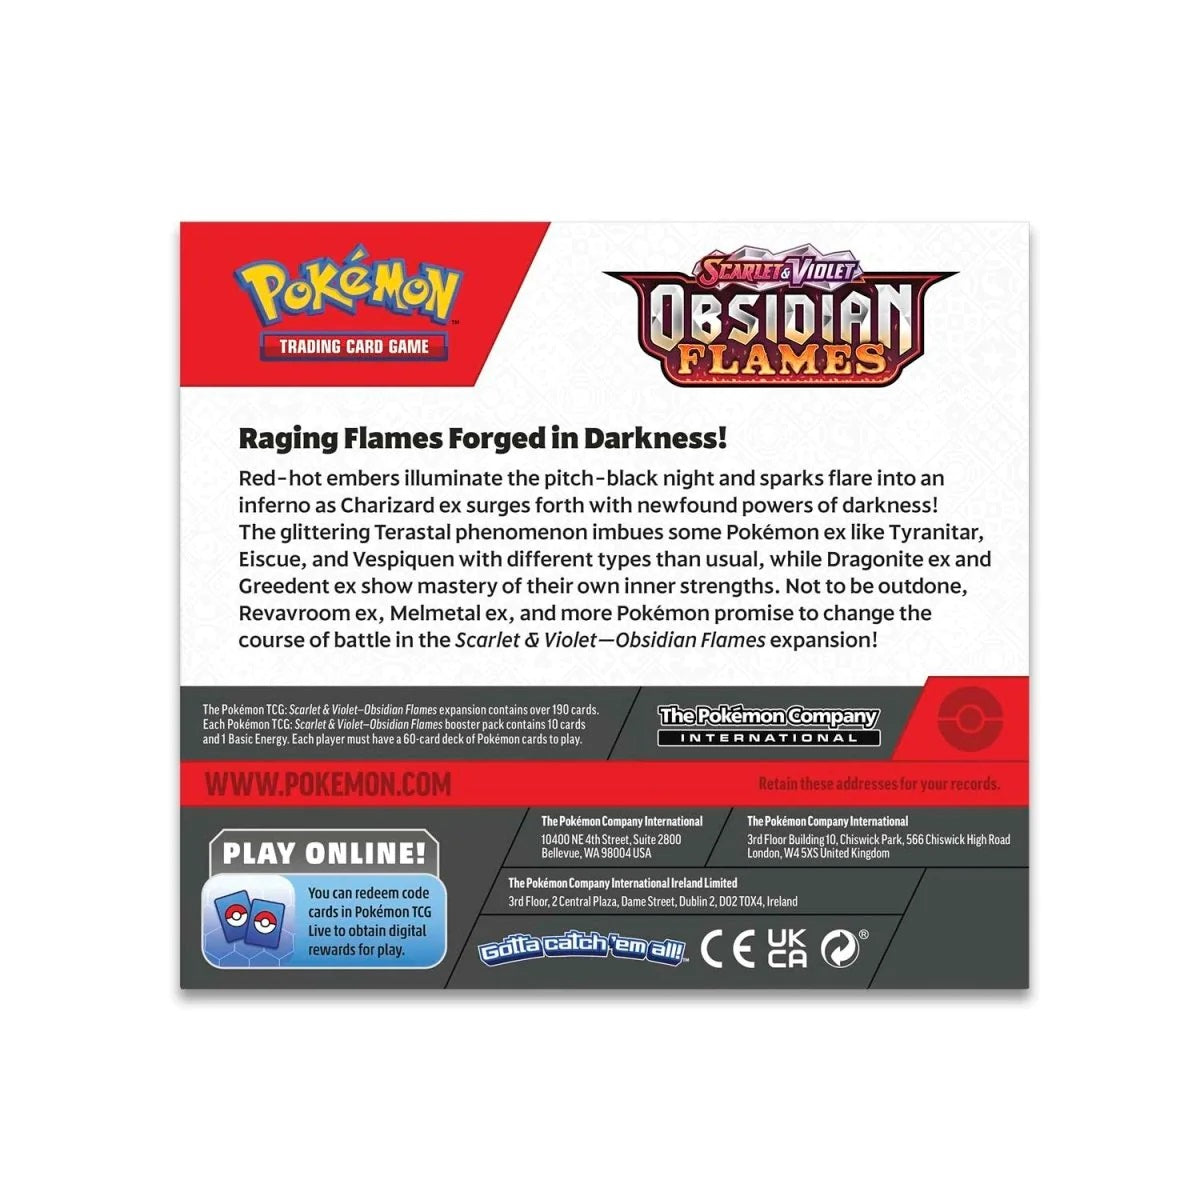 Pokémon TCG: Obsidian Flame SV03 Booster Box-The Pokémon Company International-Ace Cards & Collectibles